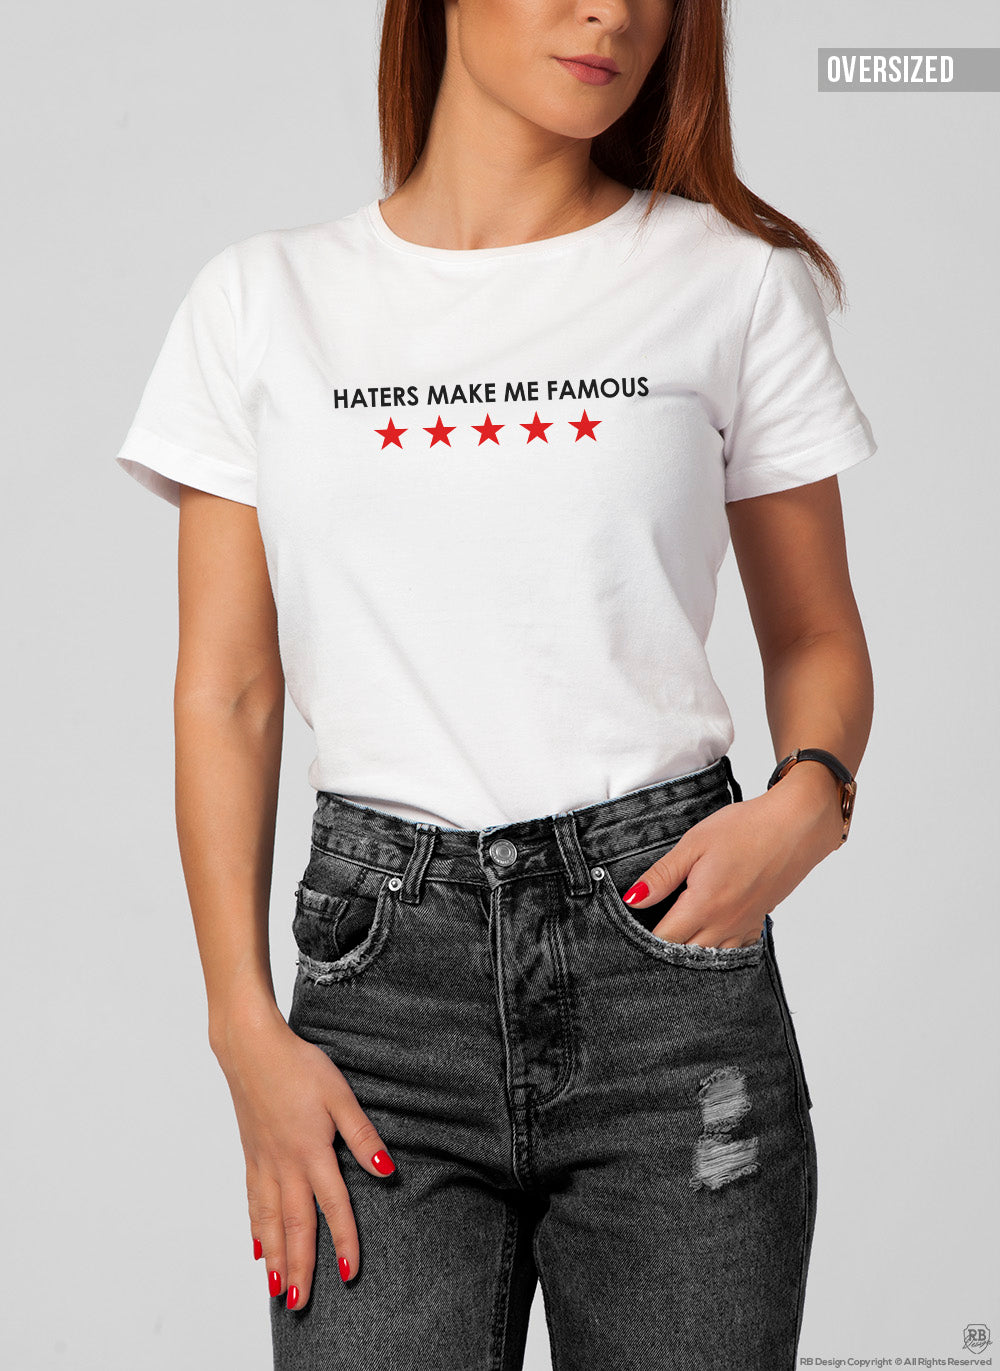 Trendy Women's T-shirt "Haters Make Me Famous" WTD09